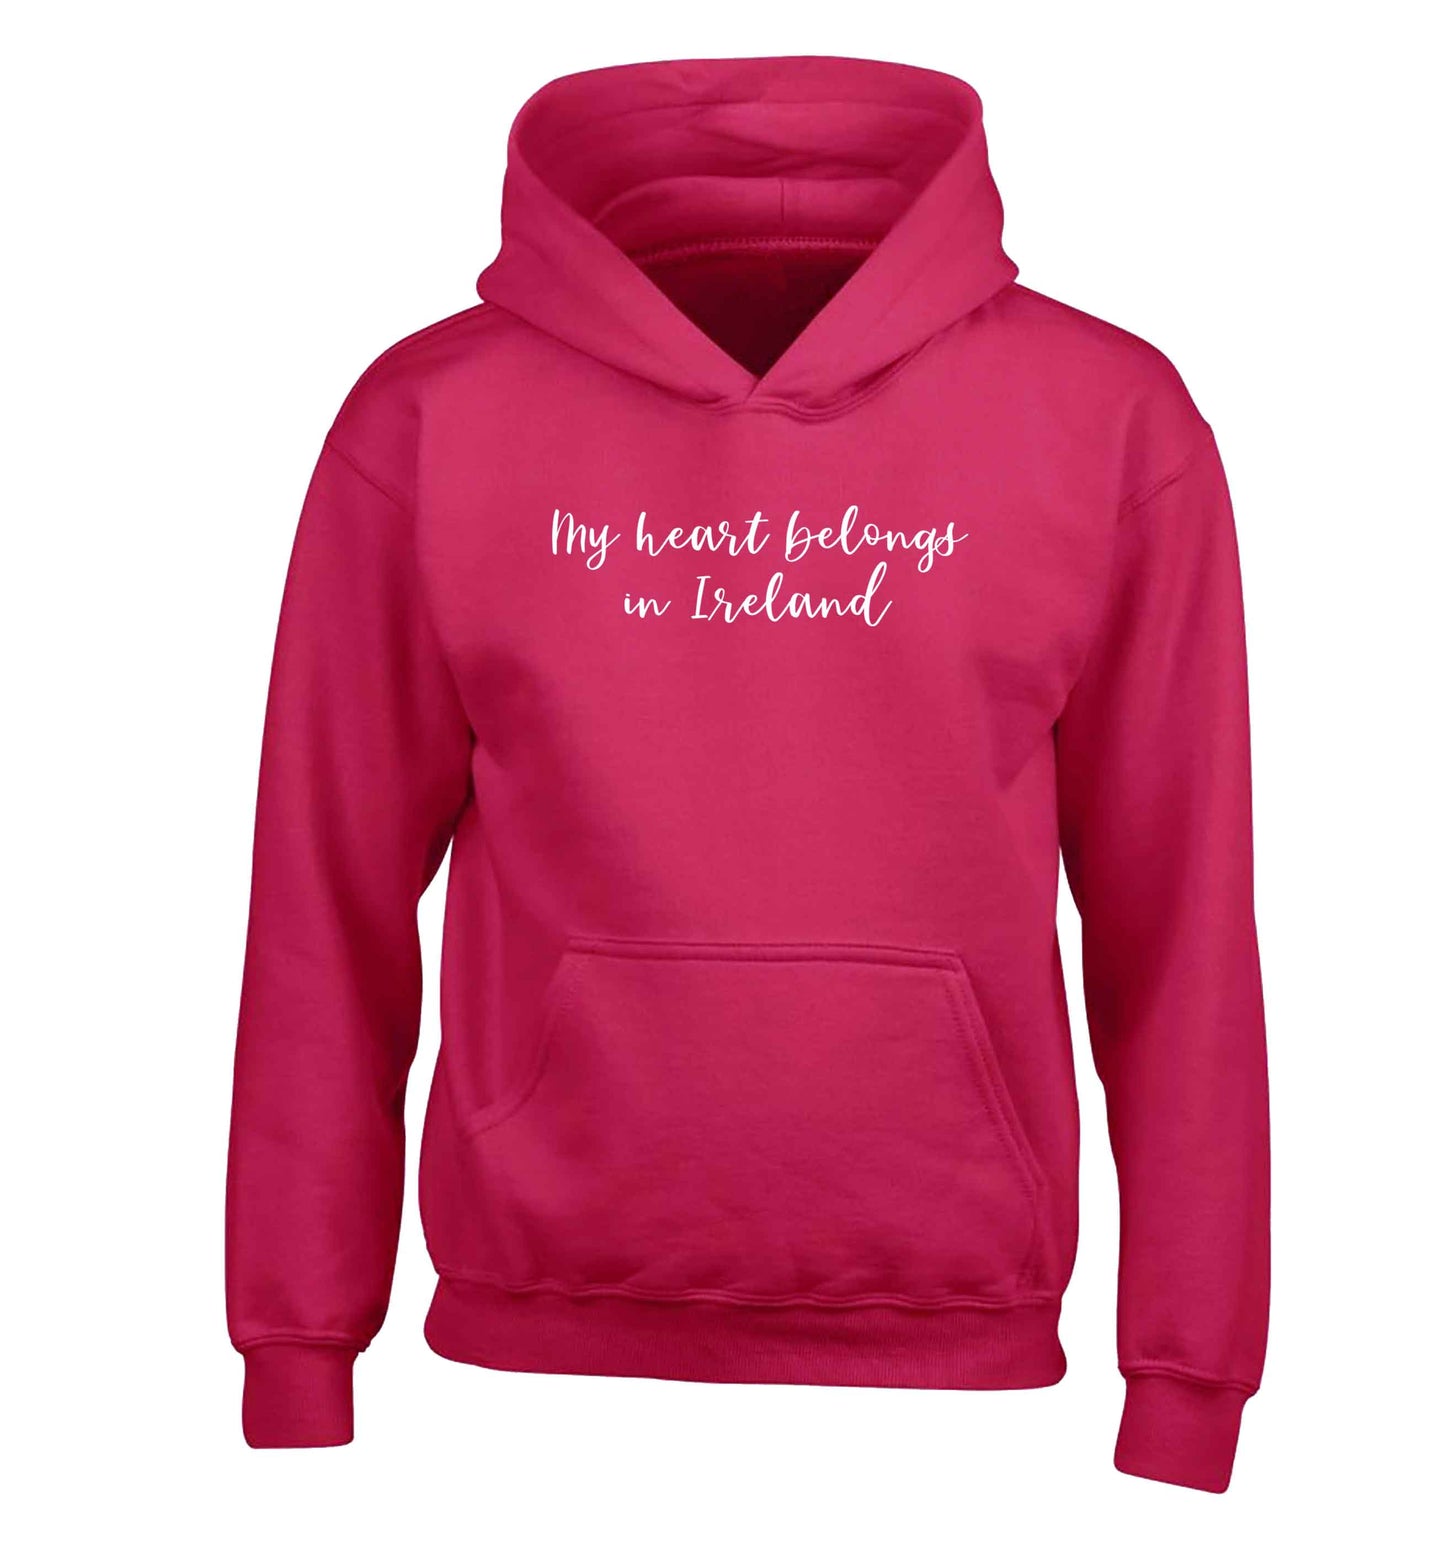 My heart belongs in Ireland children's pink hoodie 12-13 Years